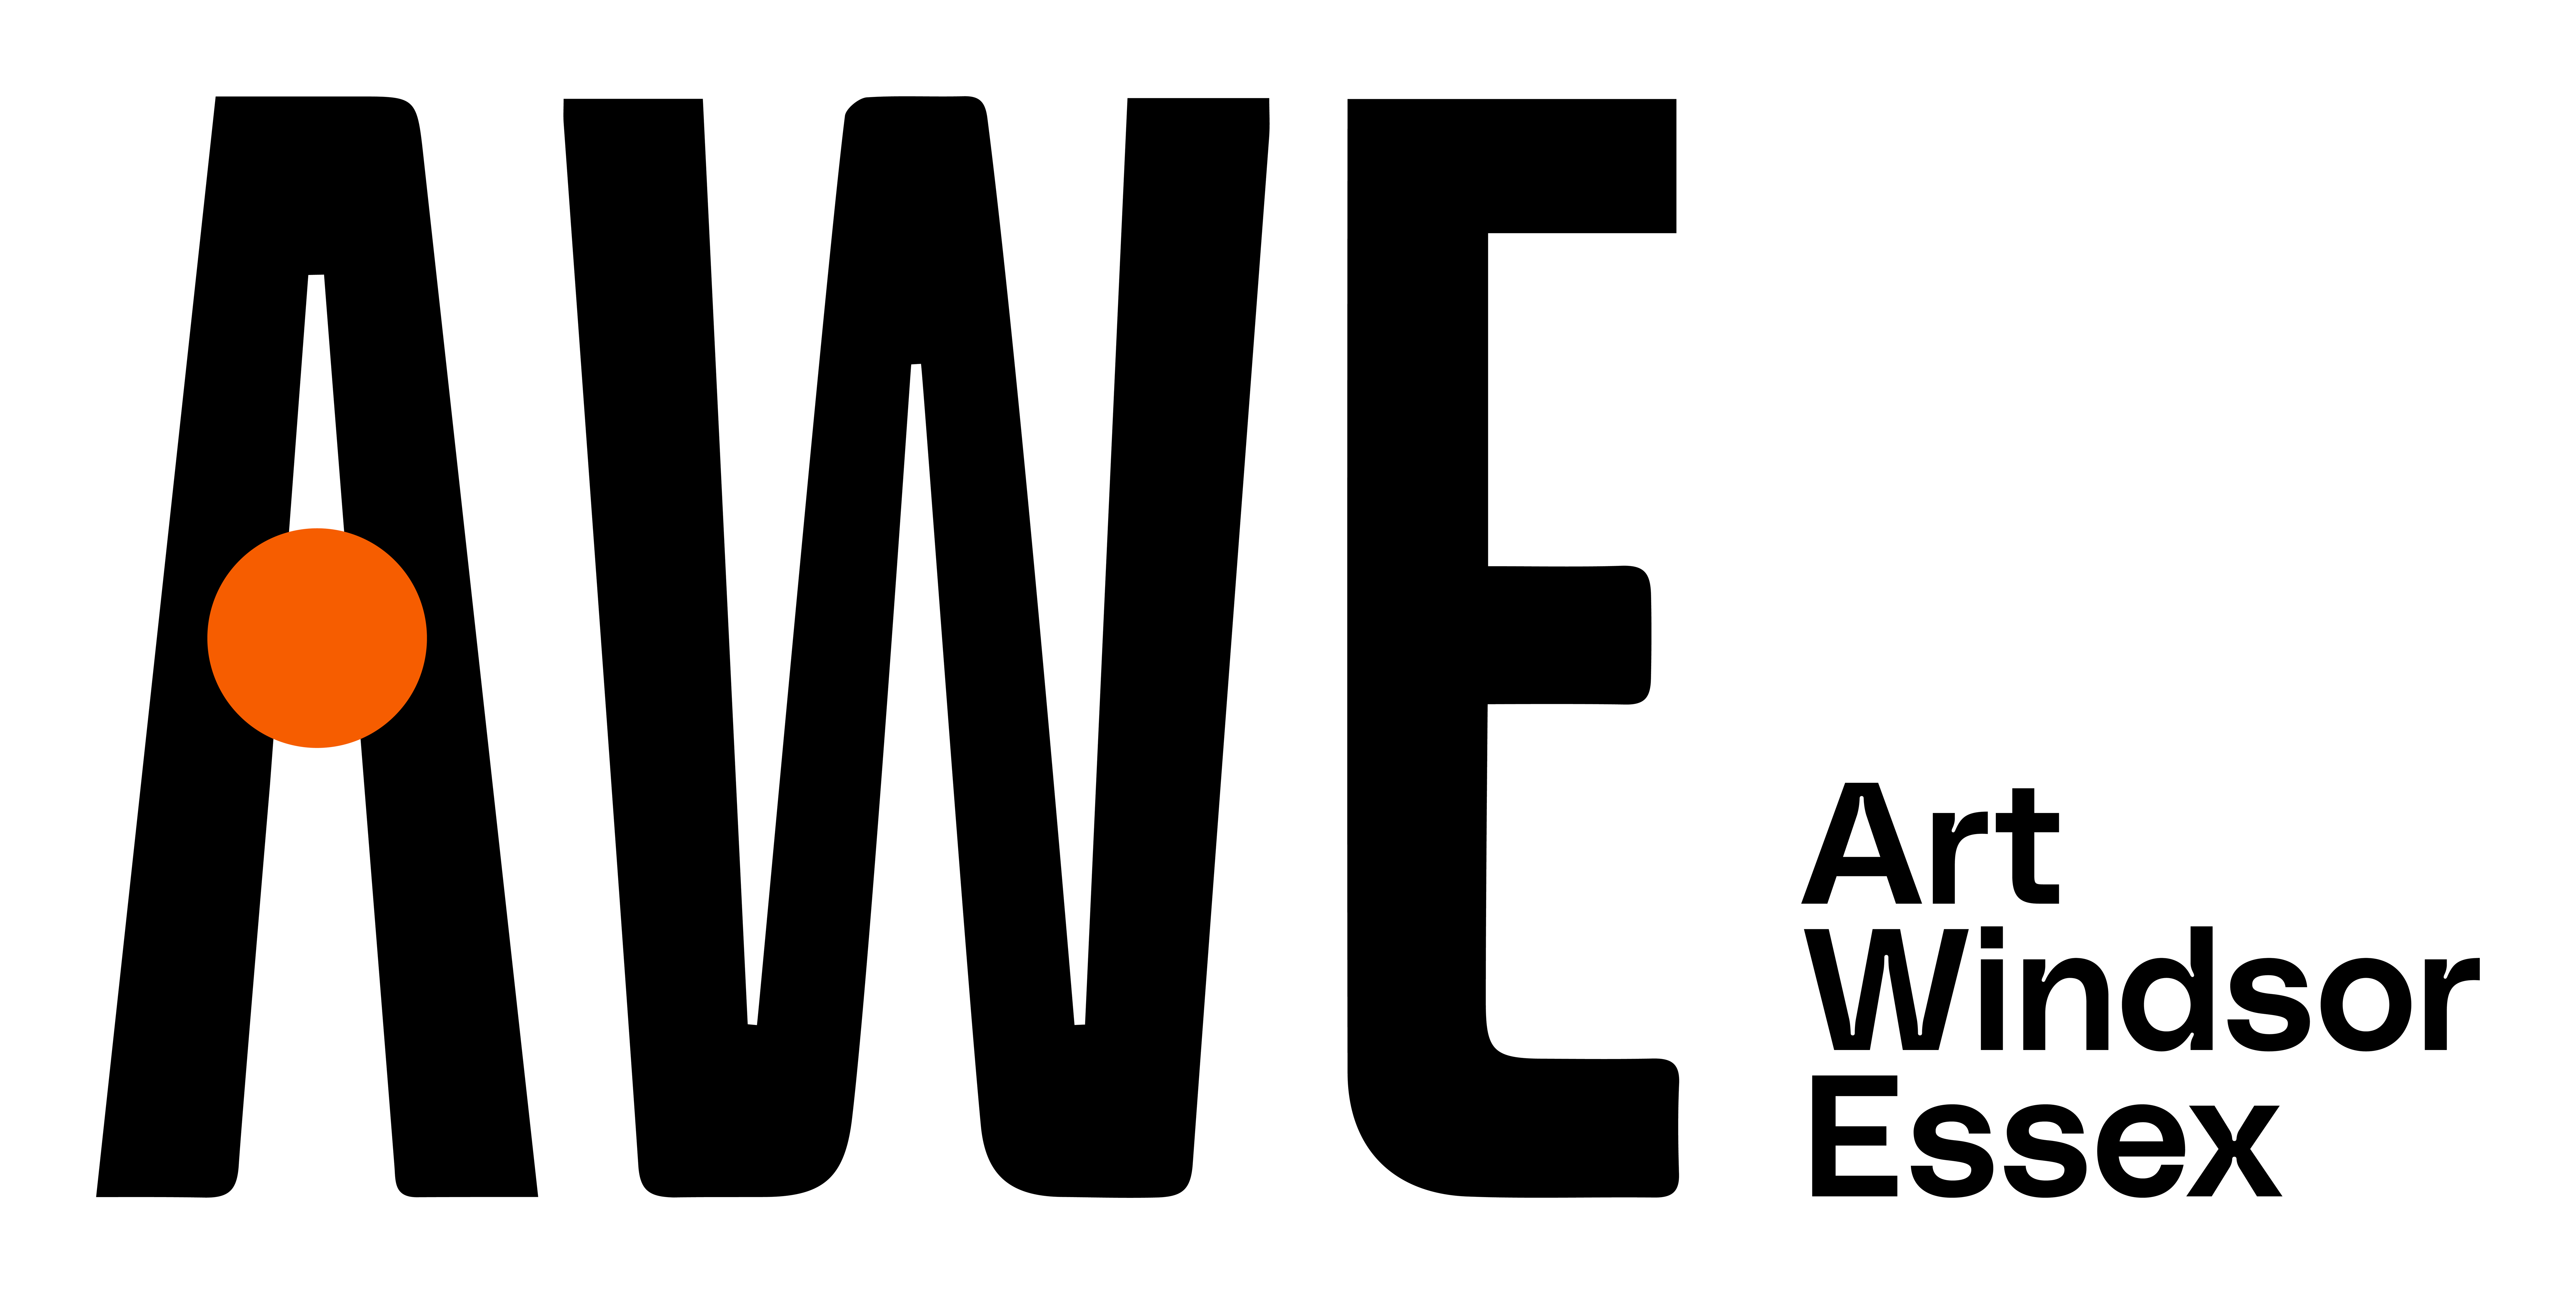 Organization logo of Art Windsor-Essex